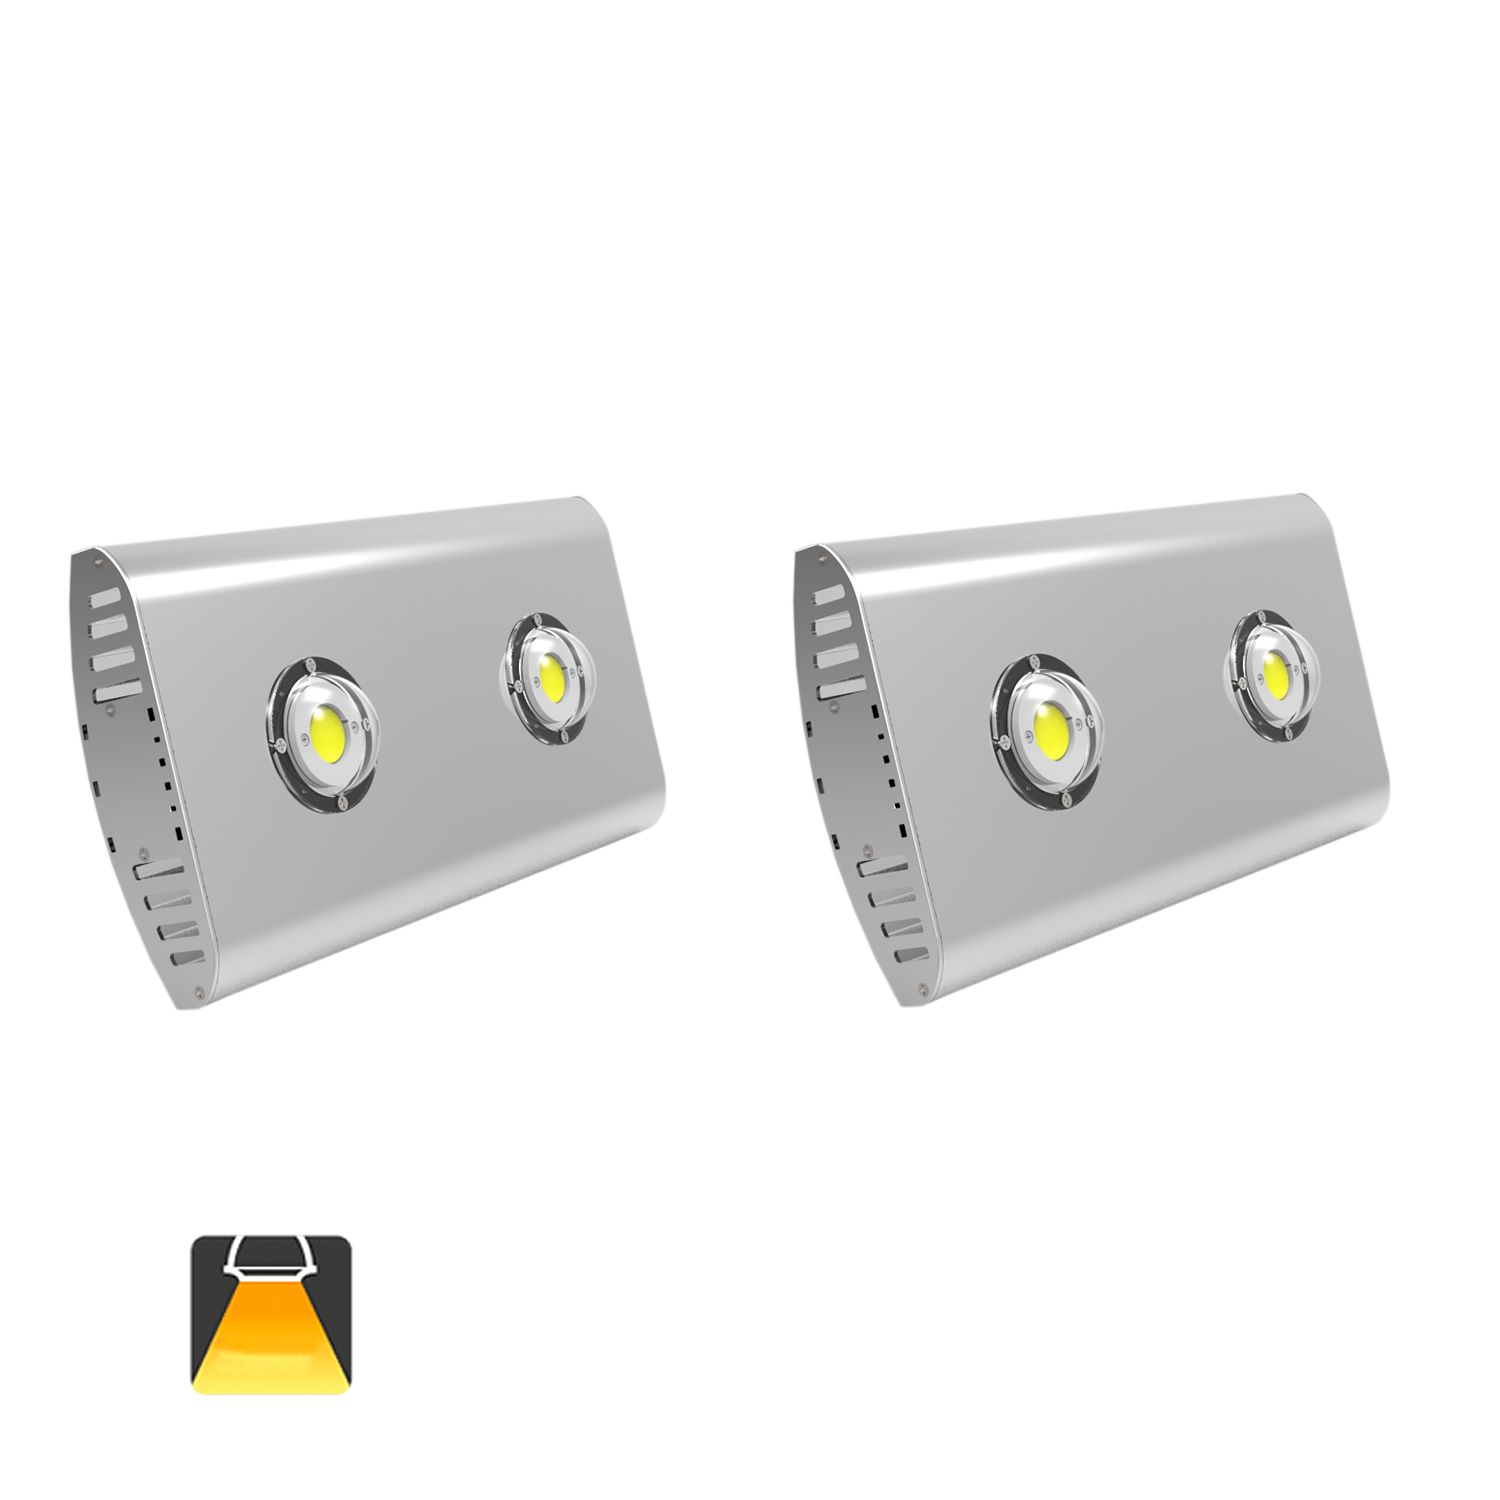 Aigostar - Confezione da 2 Faretto a LED COB, 80W, 7200LM, Impermeabile IP65, Luce Naturale 4000K[Classe di efficienza energetica A+]